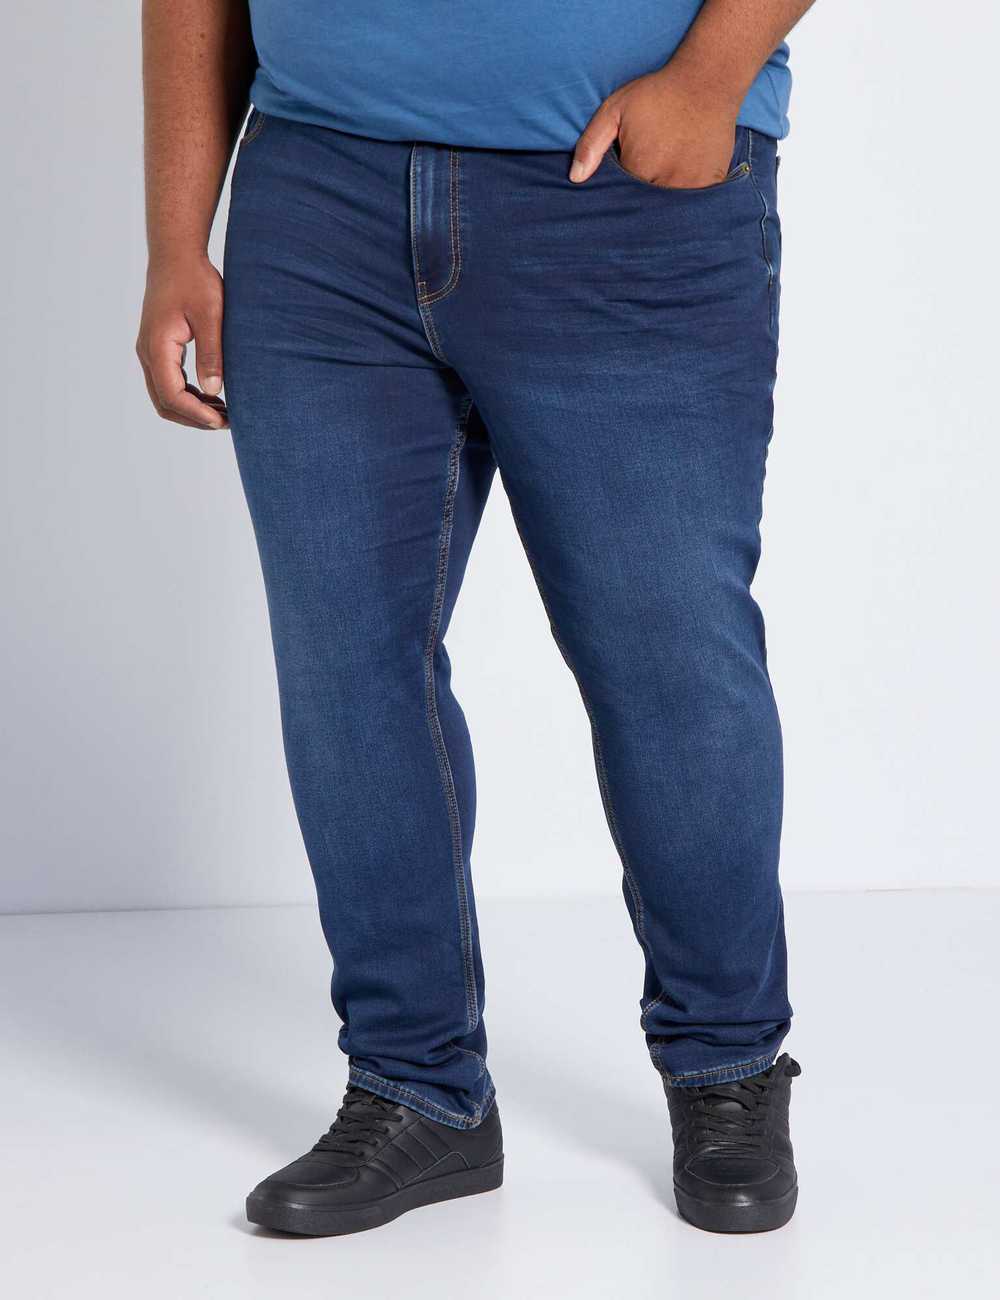 Buy Slim-fit stretch jeans Online in Dubai & the UAE